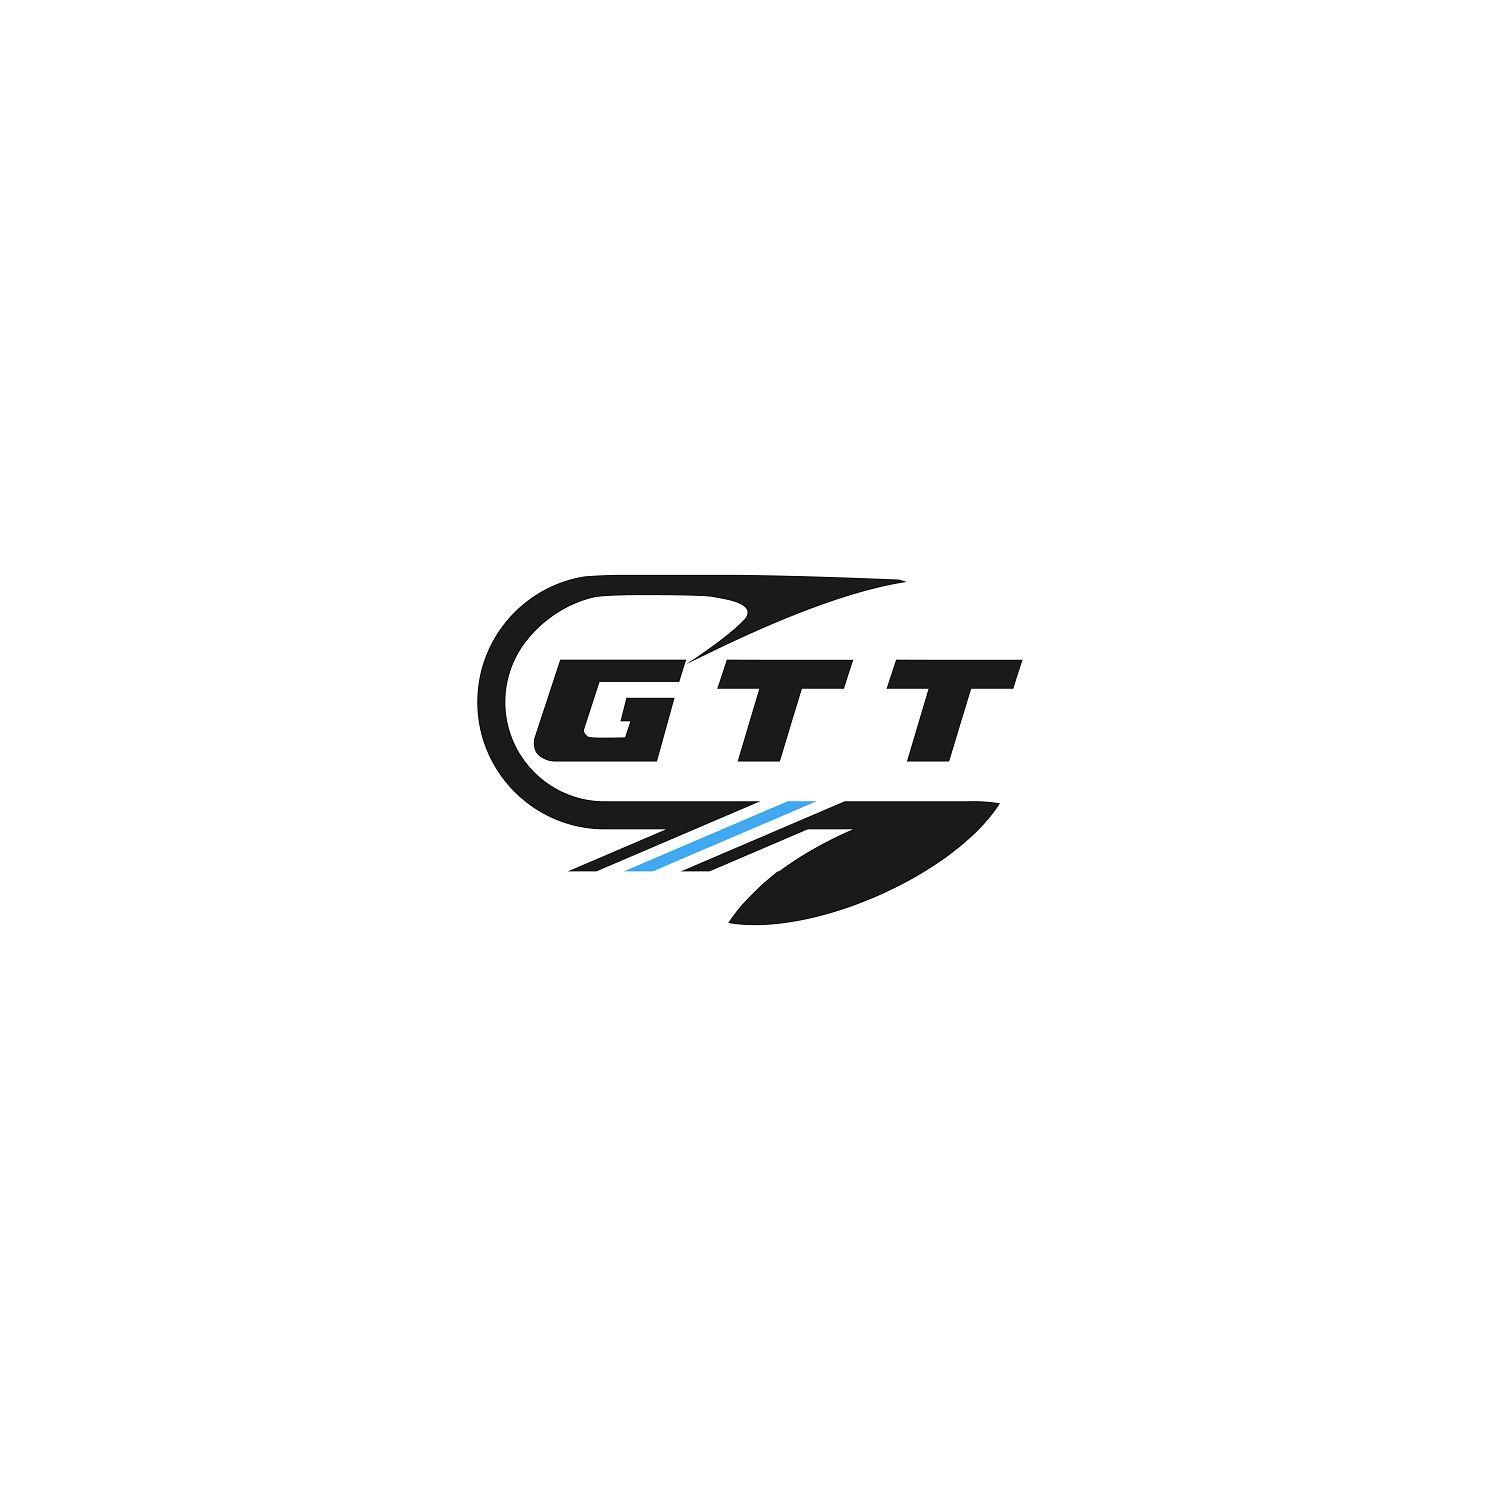 Gtt Logo - Modern, Professional Logo Design for GTT by Creative_Projectss ...